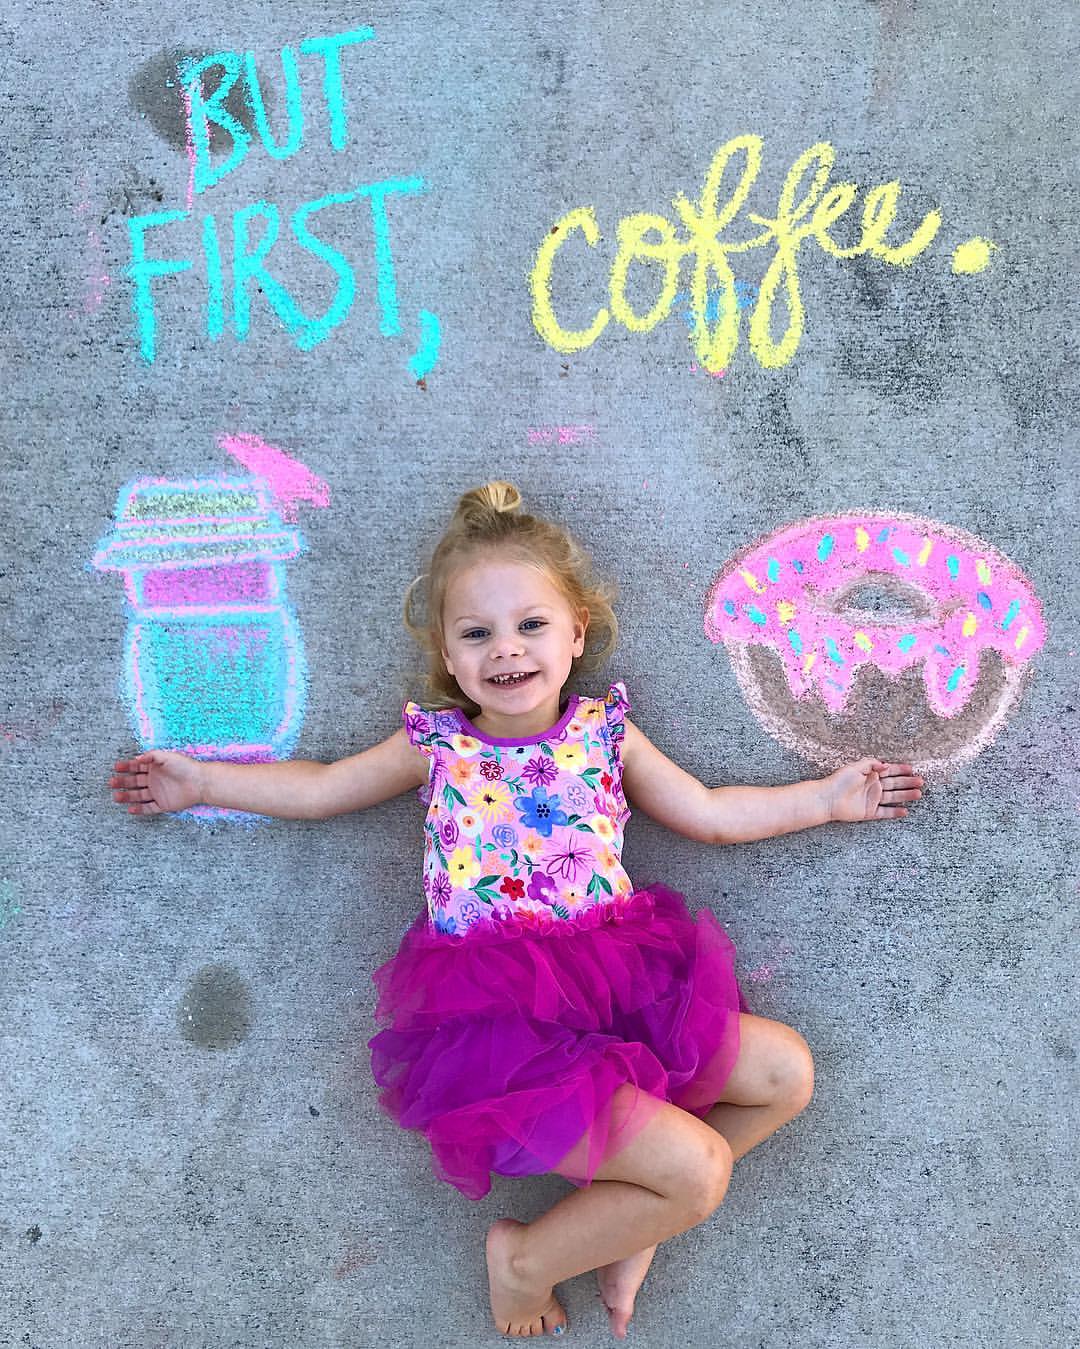 little girl with cake sidewalk chalk designs